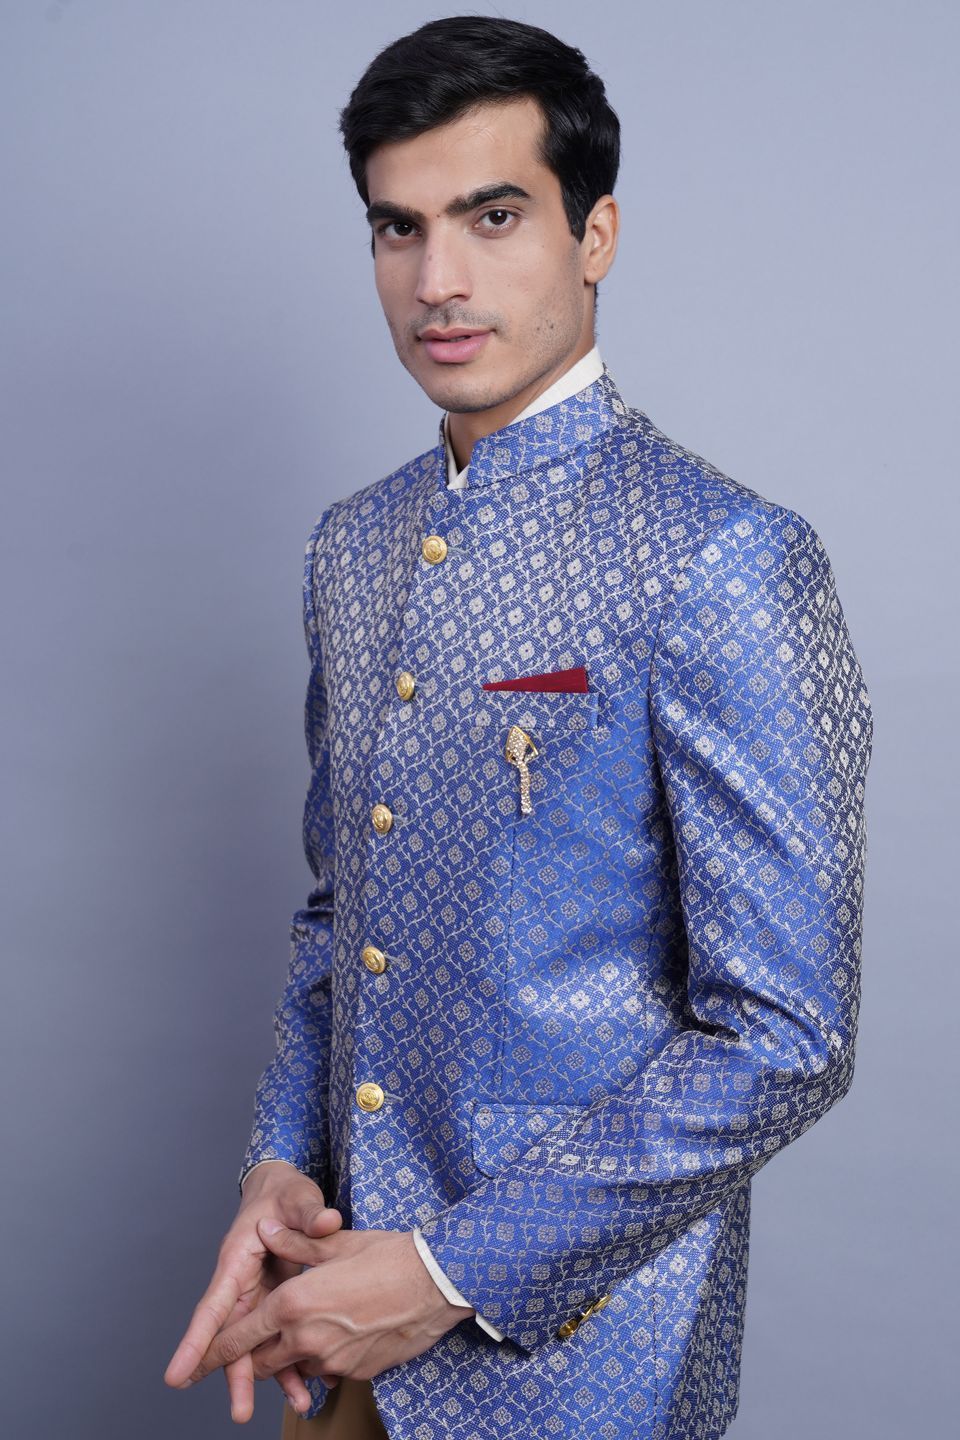 Wintage Men's Banarsi Rayon Cotton Casual and Festive Indian Jodhpuri Grandad Bandhgala Blazer : Blue